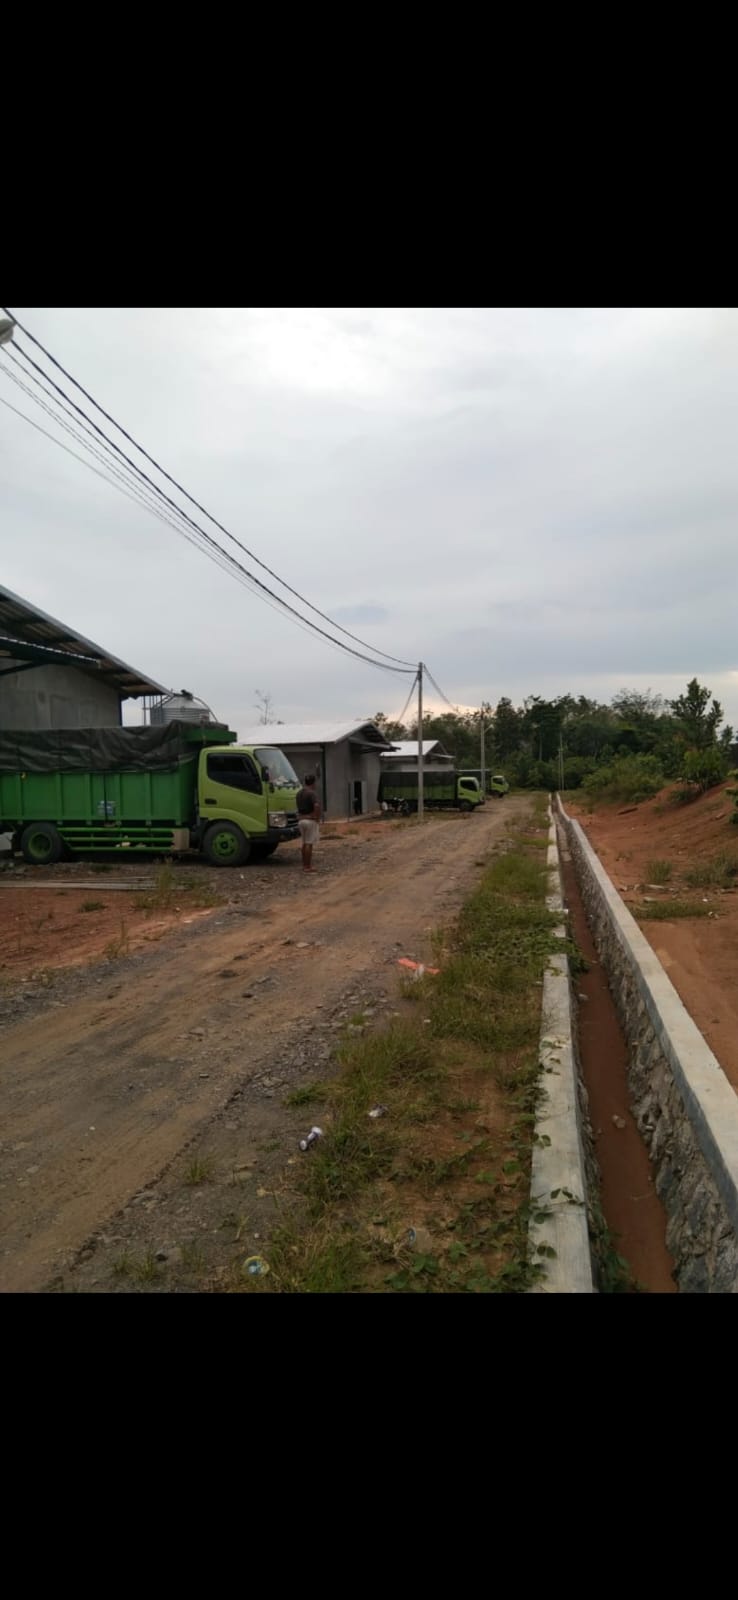 Miris, 5 Tahun Beroperasi Perusahaan Farm Broiler PT. Malindo Diduga Lalaikan CSR